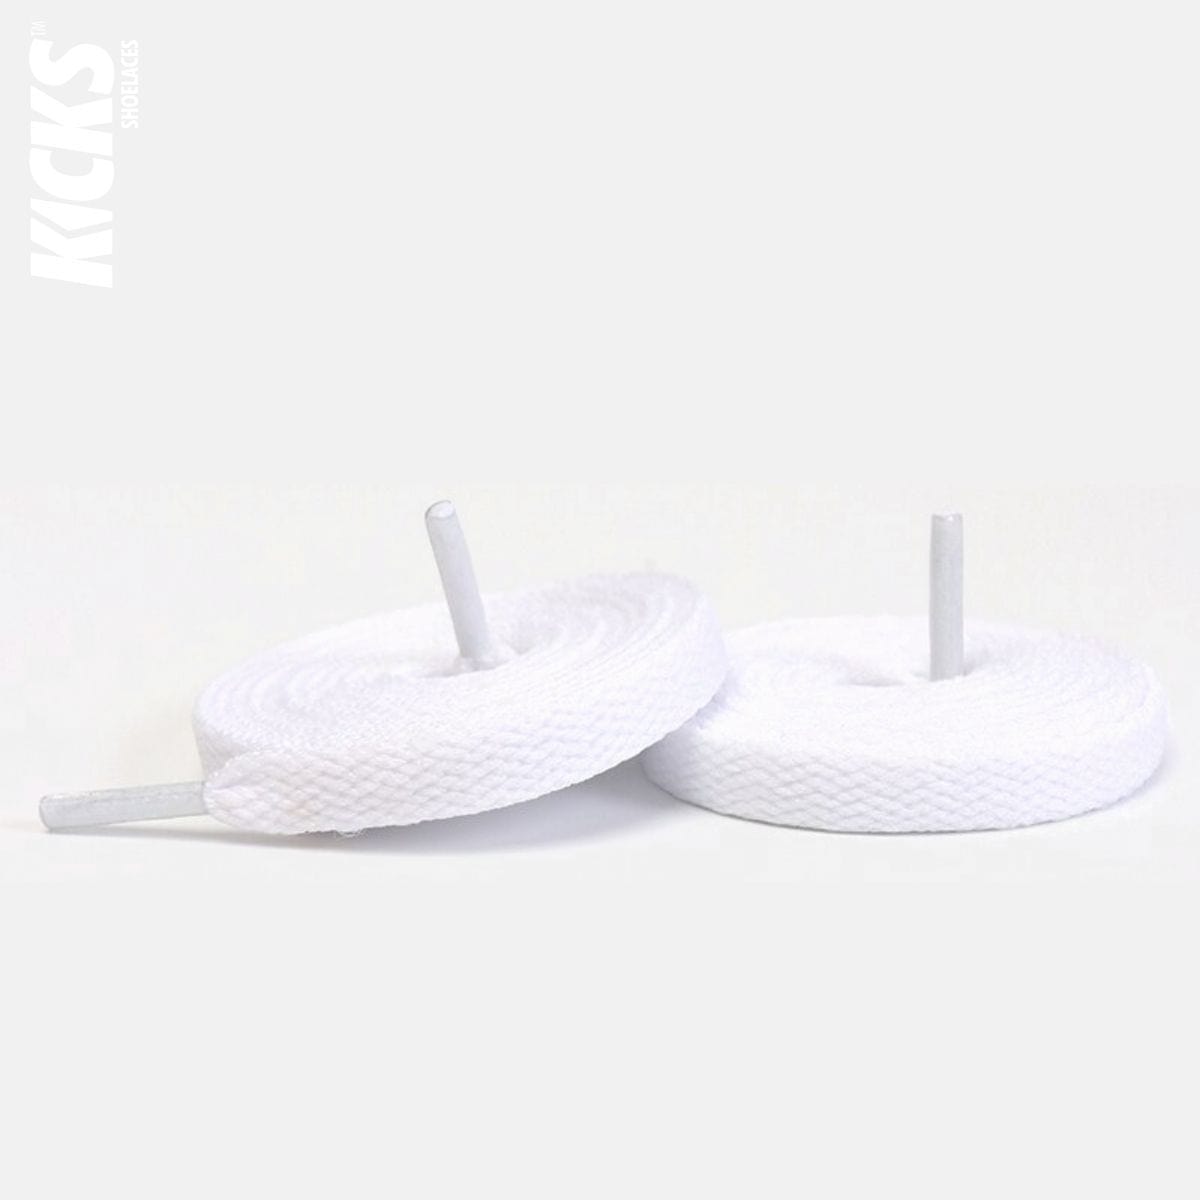 Nike Cortez Replacement Shoelaces